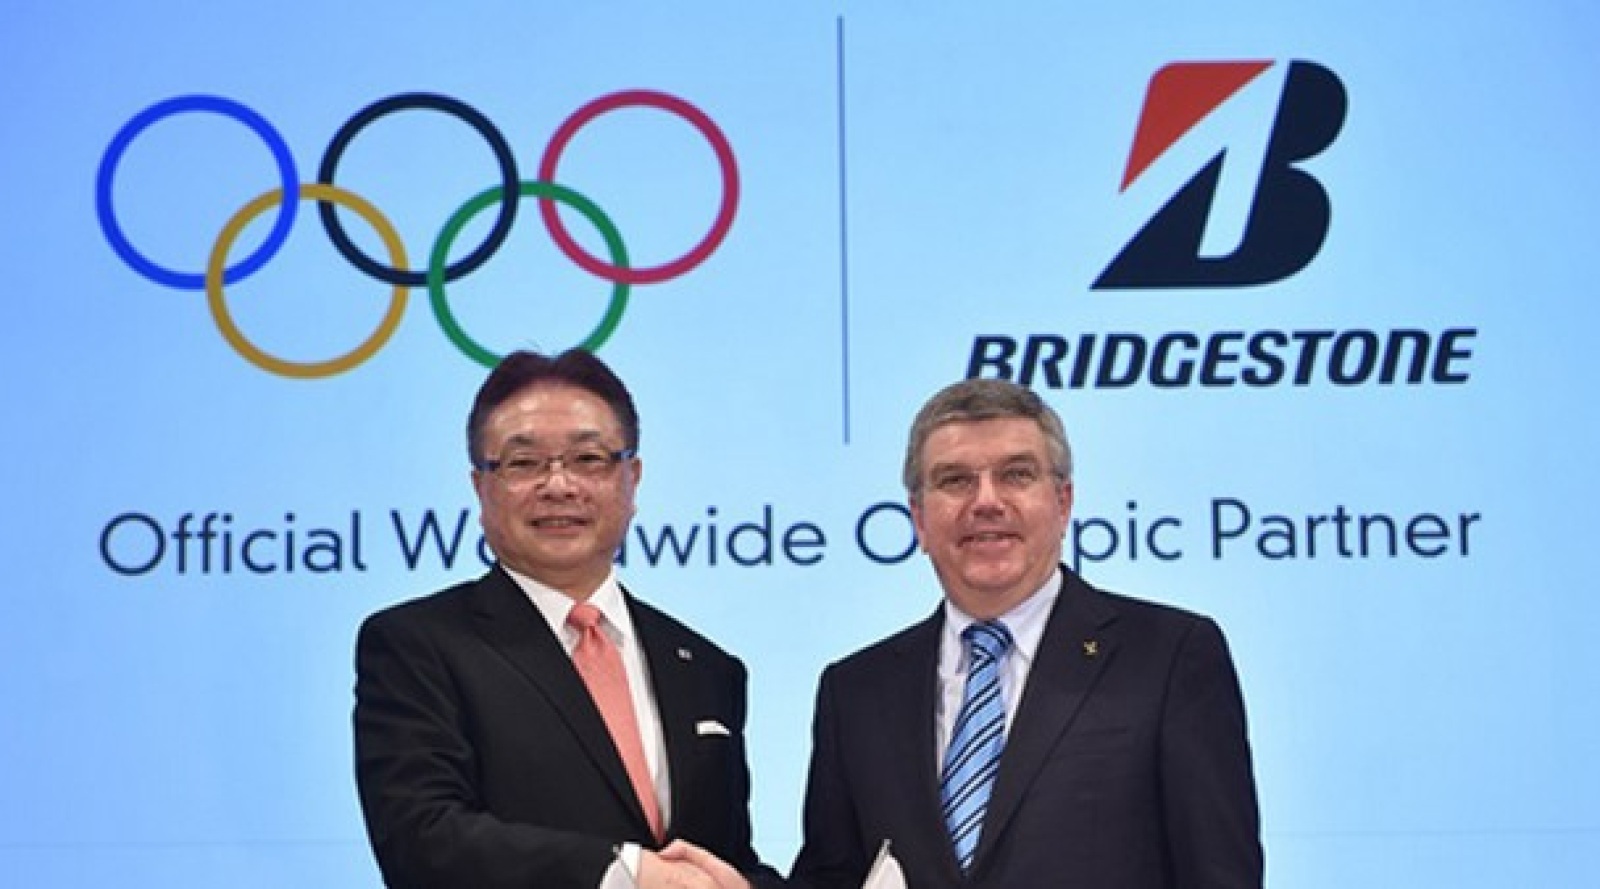 Bridgestone sponsor mondial olympique jusqu’en 2024 Image CB News